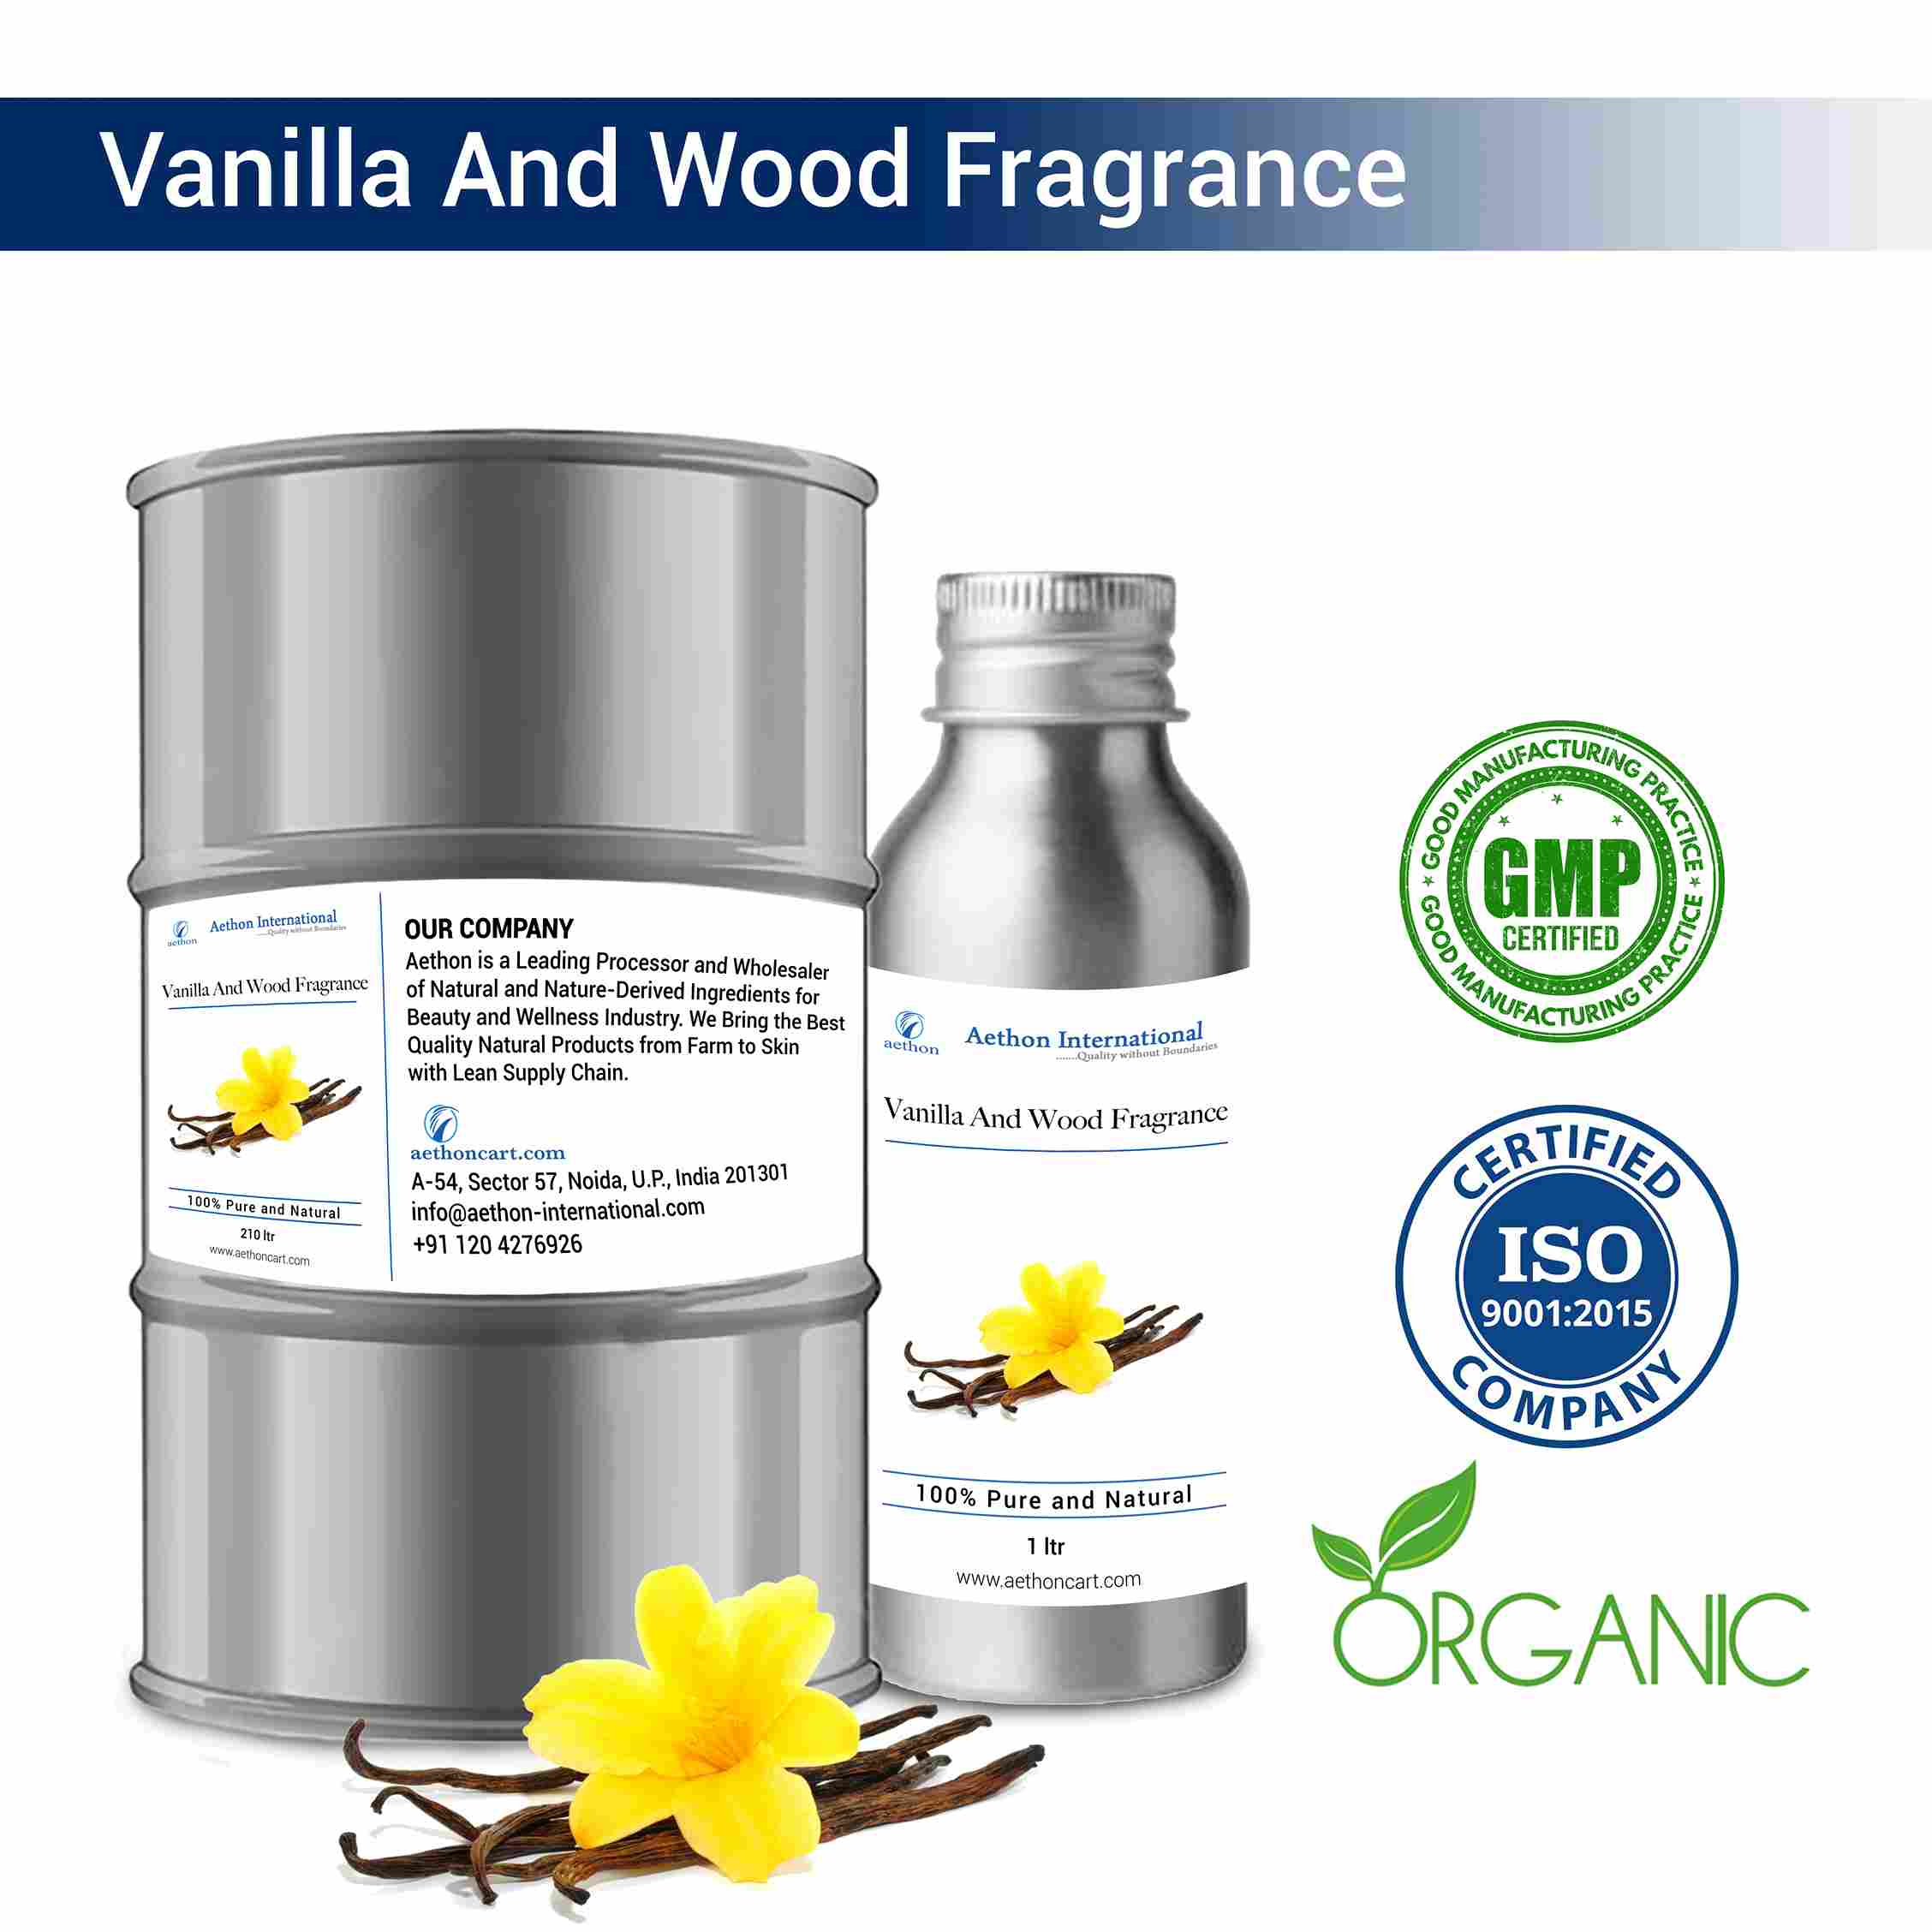 Vanilla And Wood Fragrance